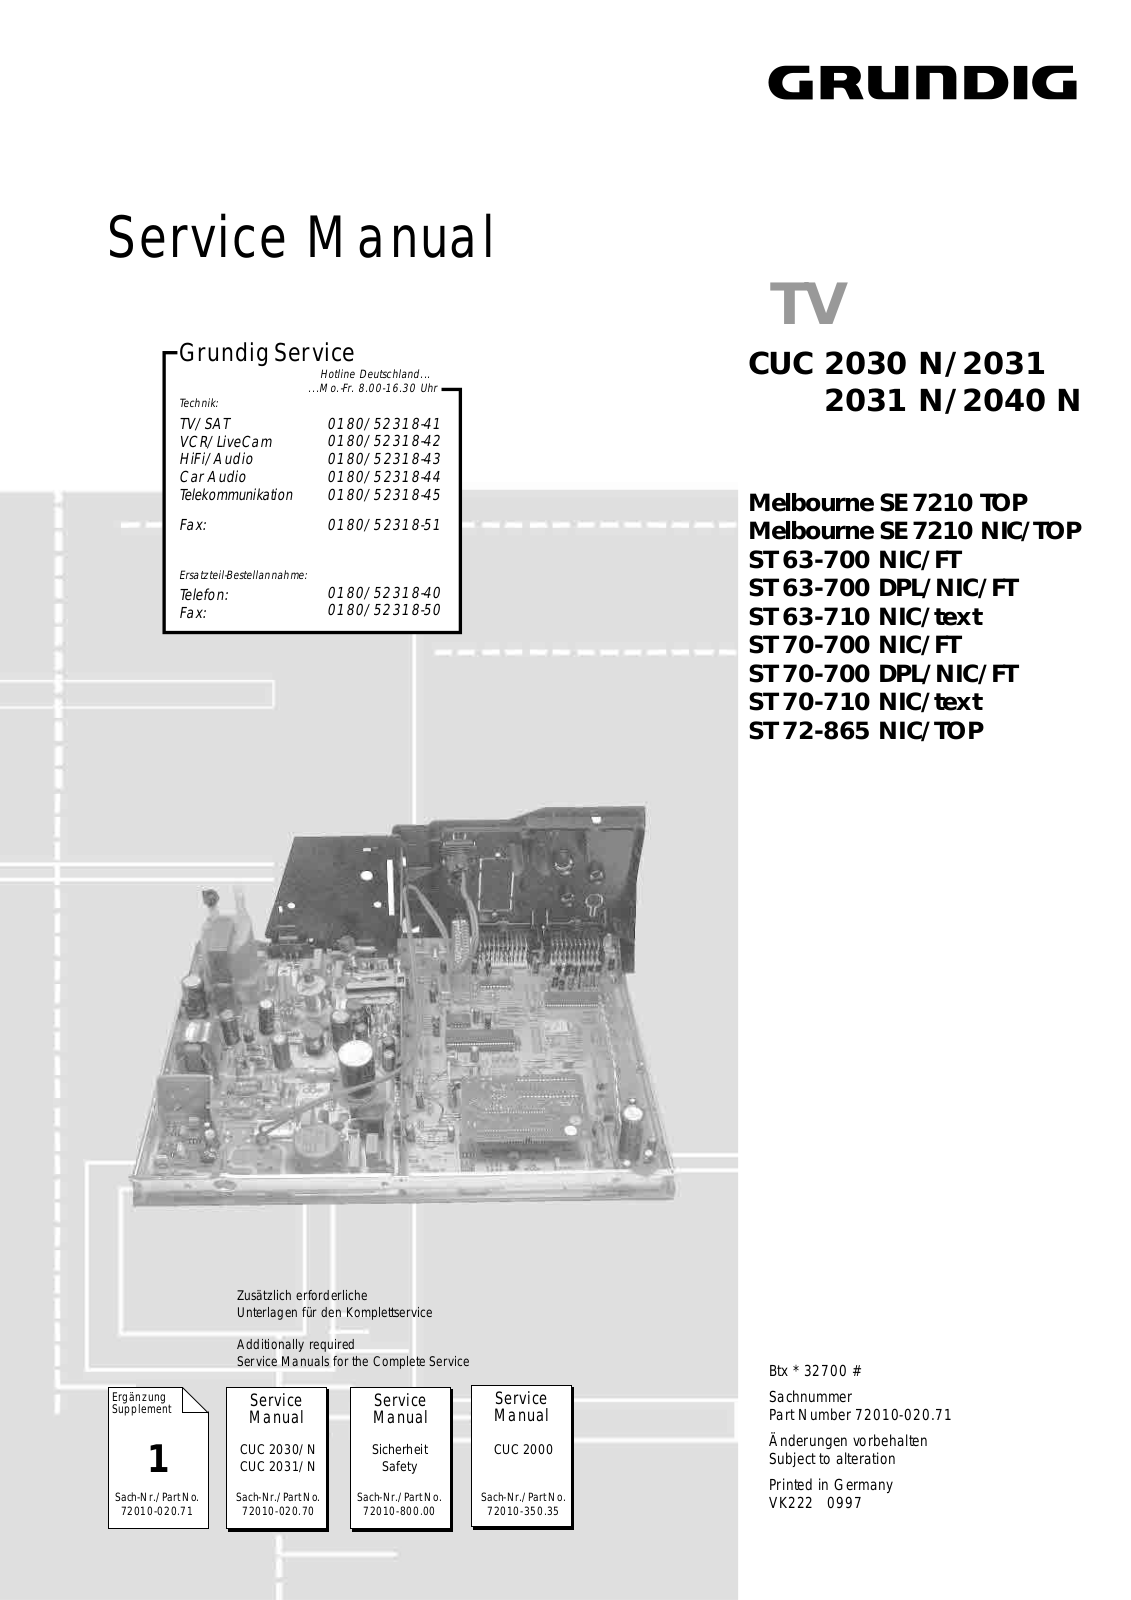 Grundig ST 72-865 NIC, ST 70-710 NIC, ST 70-700 NIC, ST 63-710 NIC, ST 63-700 DPL Service Manual